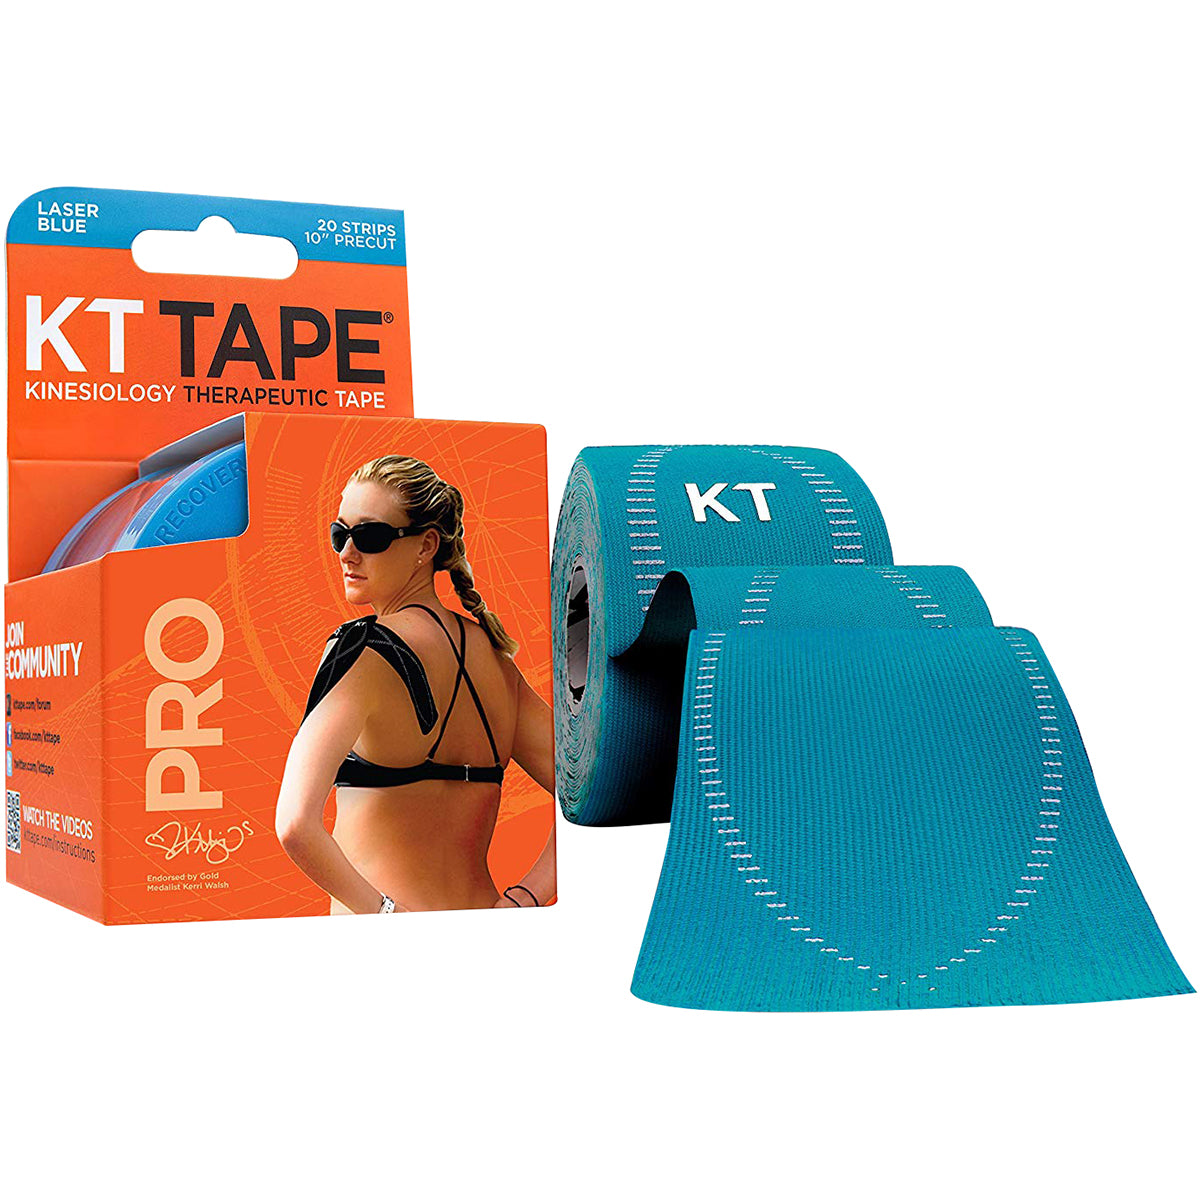 KT Tape Pro 10" Precut Kinesiology Elastic Sports Roll - 20 Strips - Laser Blue KT Tape